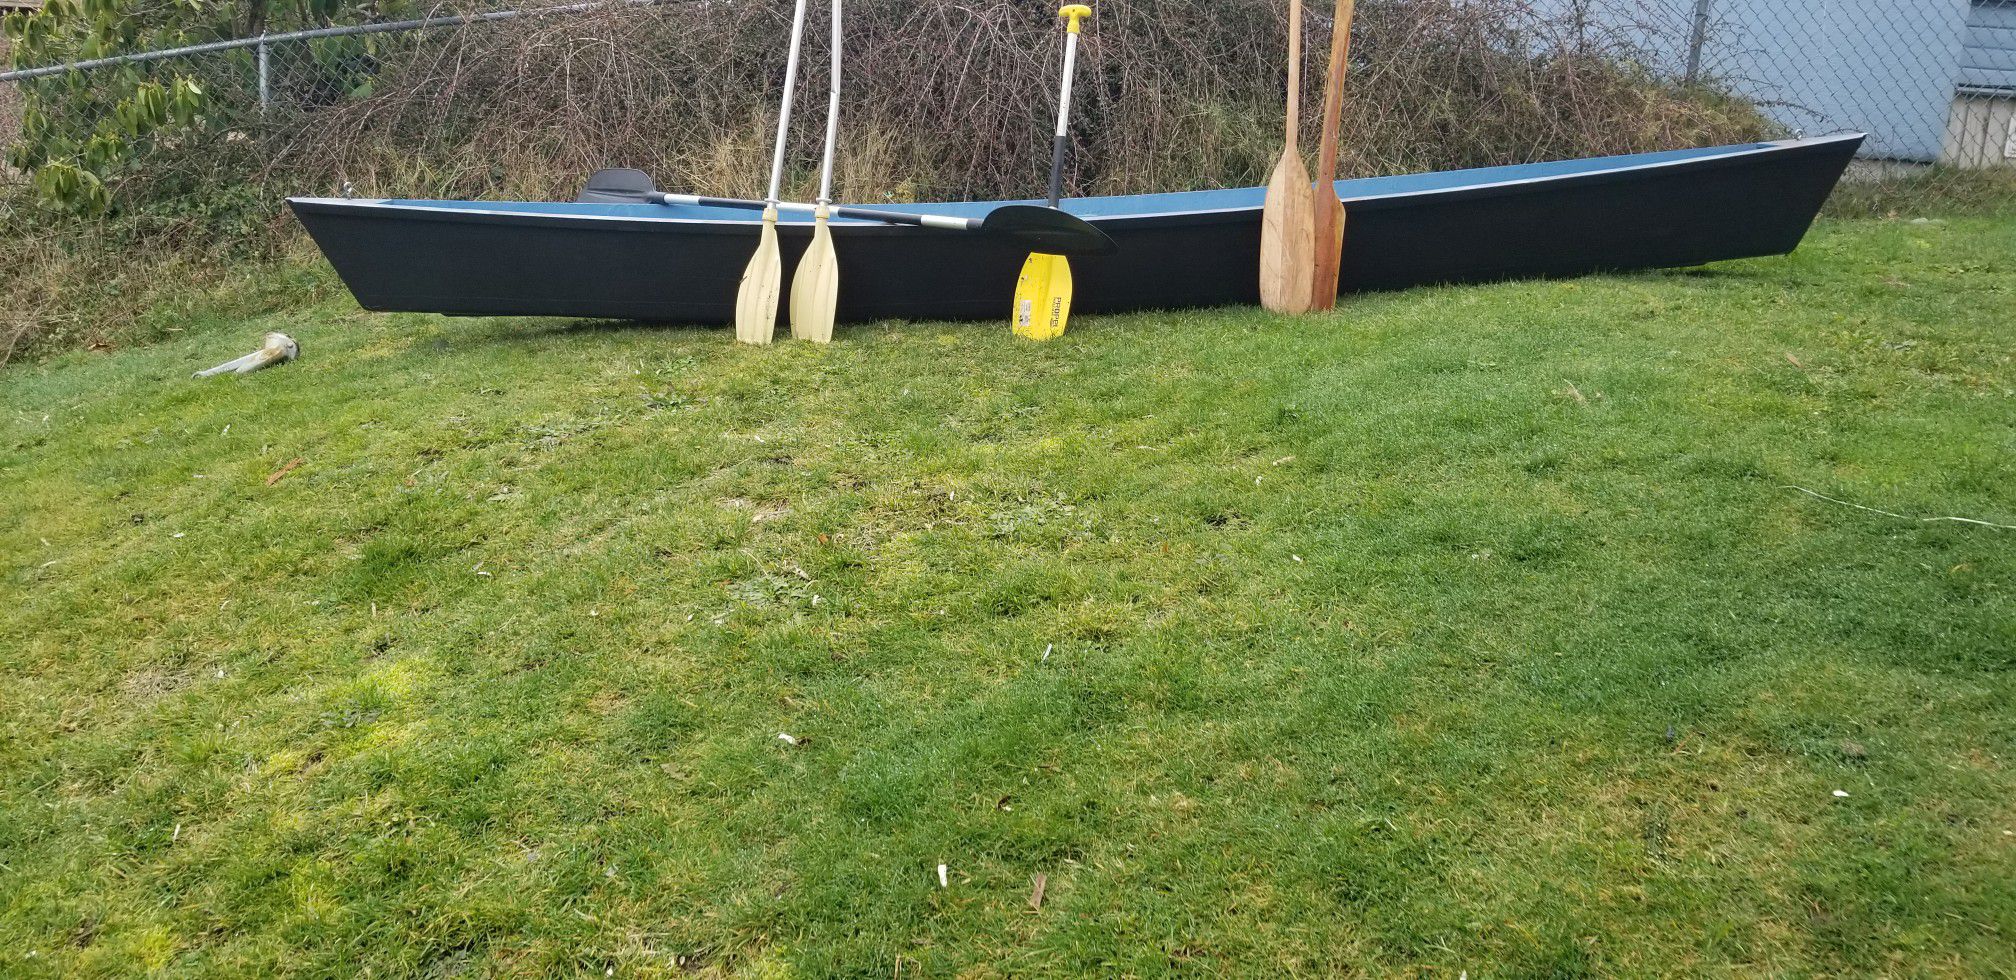 16" flat bottom canoe